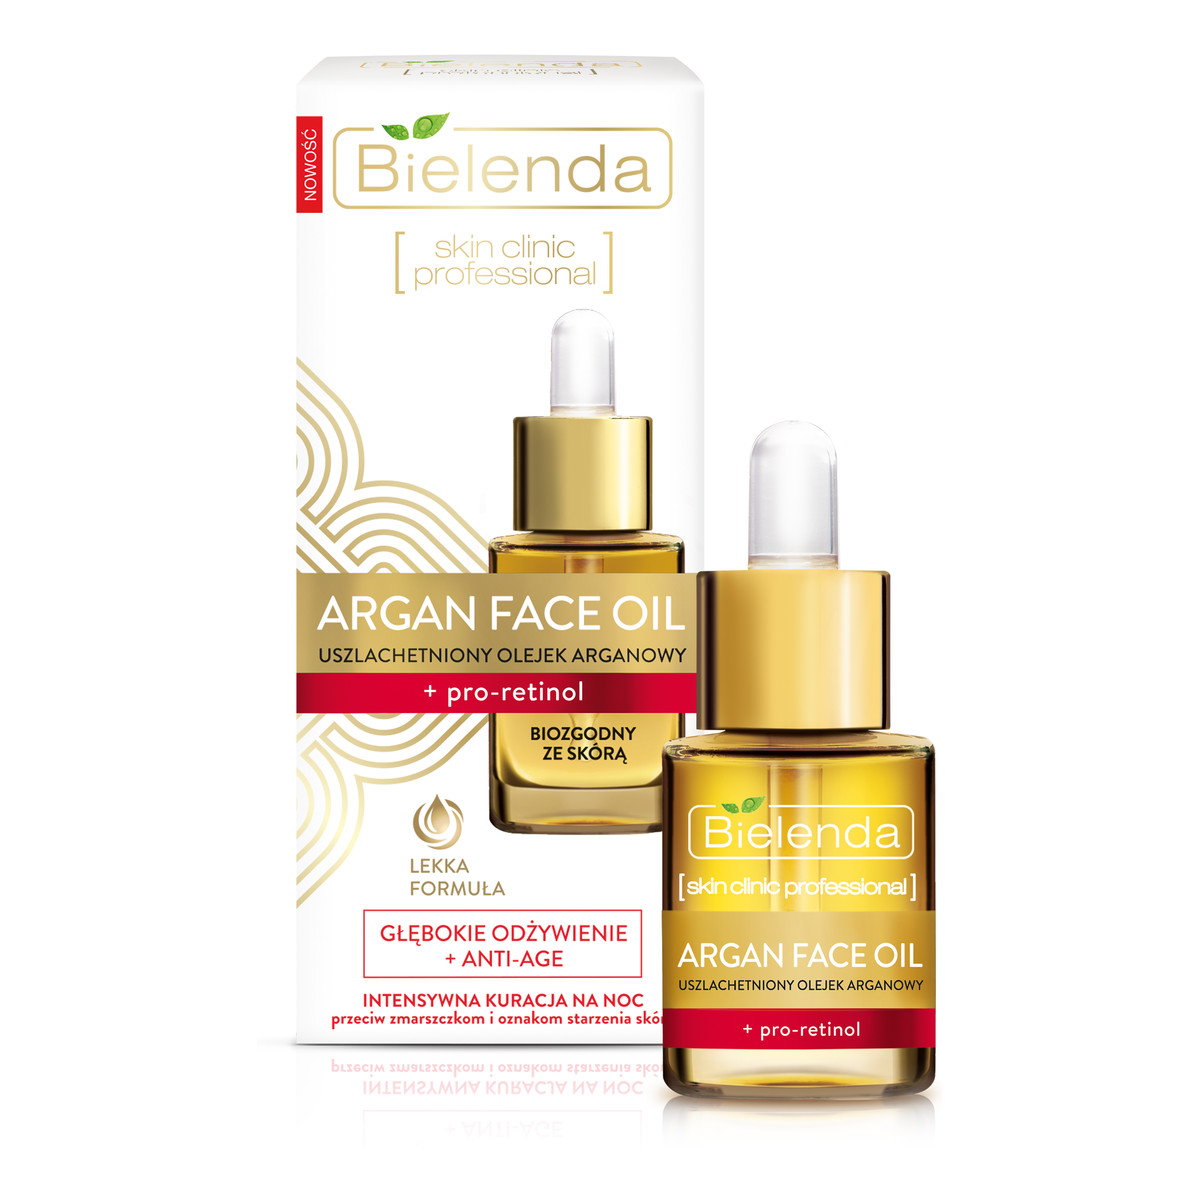 Bielenda Skin Clinic Professional Argan Face Oil Uszlachetniony Olejek Arganowy + Pro-retinol 15ml